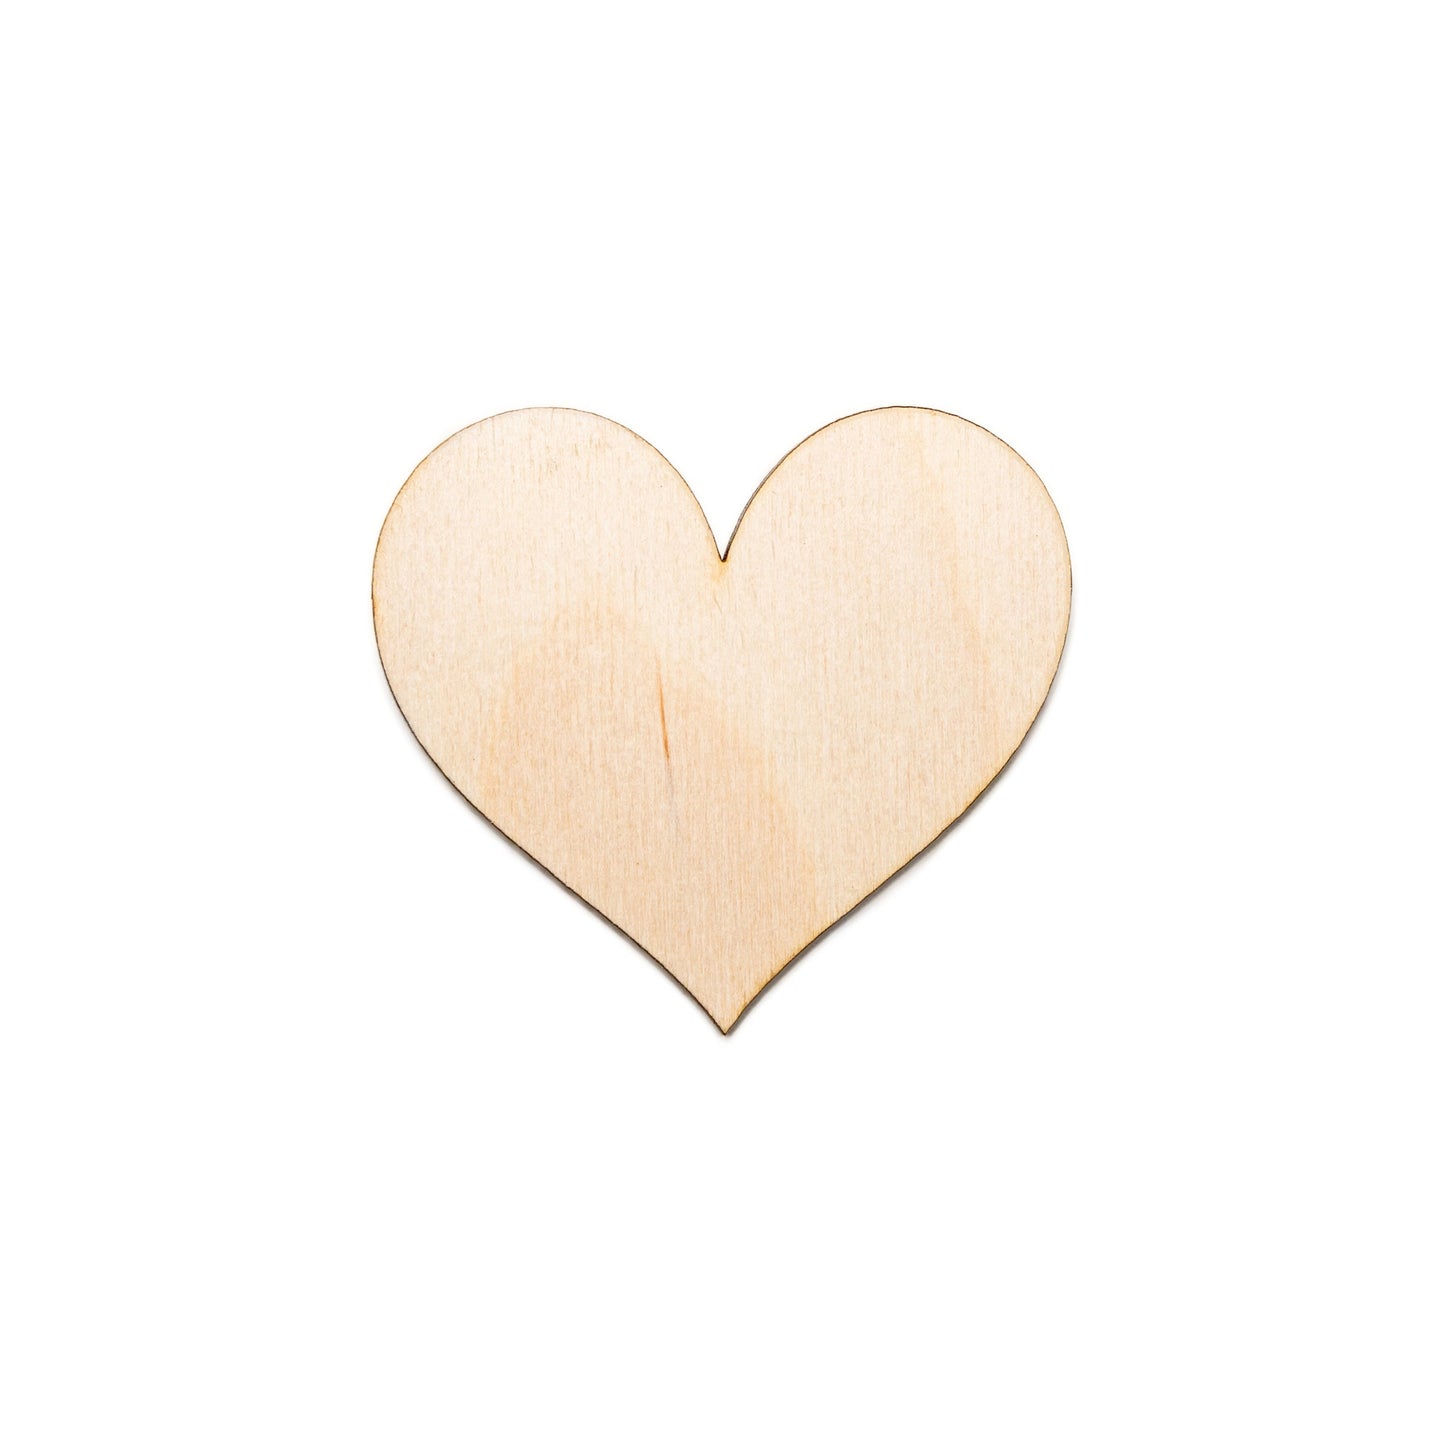 Heart-Wood Cutout-Heart Shapes Wood Decor-Various Size-Heart Theme Decor-DIY Crafts-Love-Love Party Favors-Love Home Decor-Valentine Decor